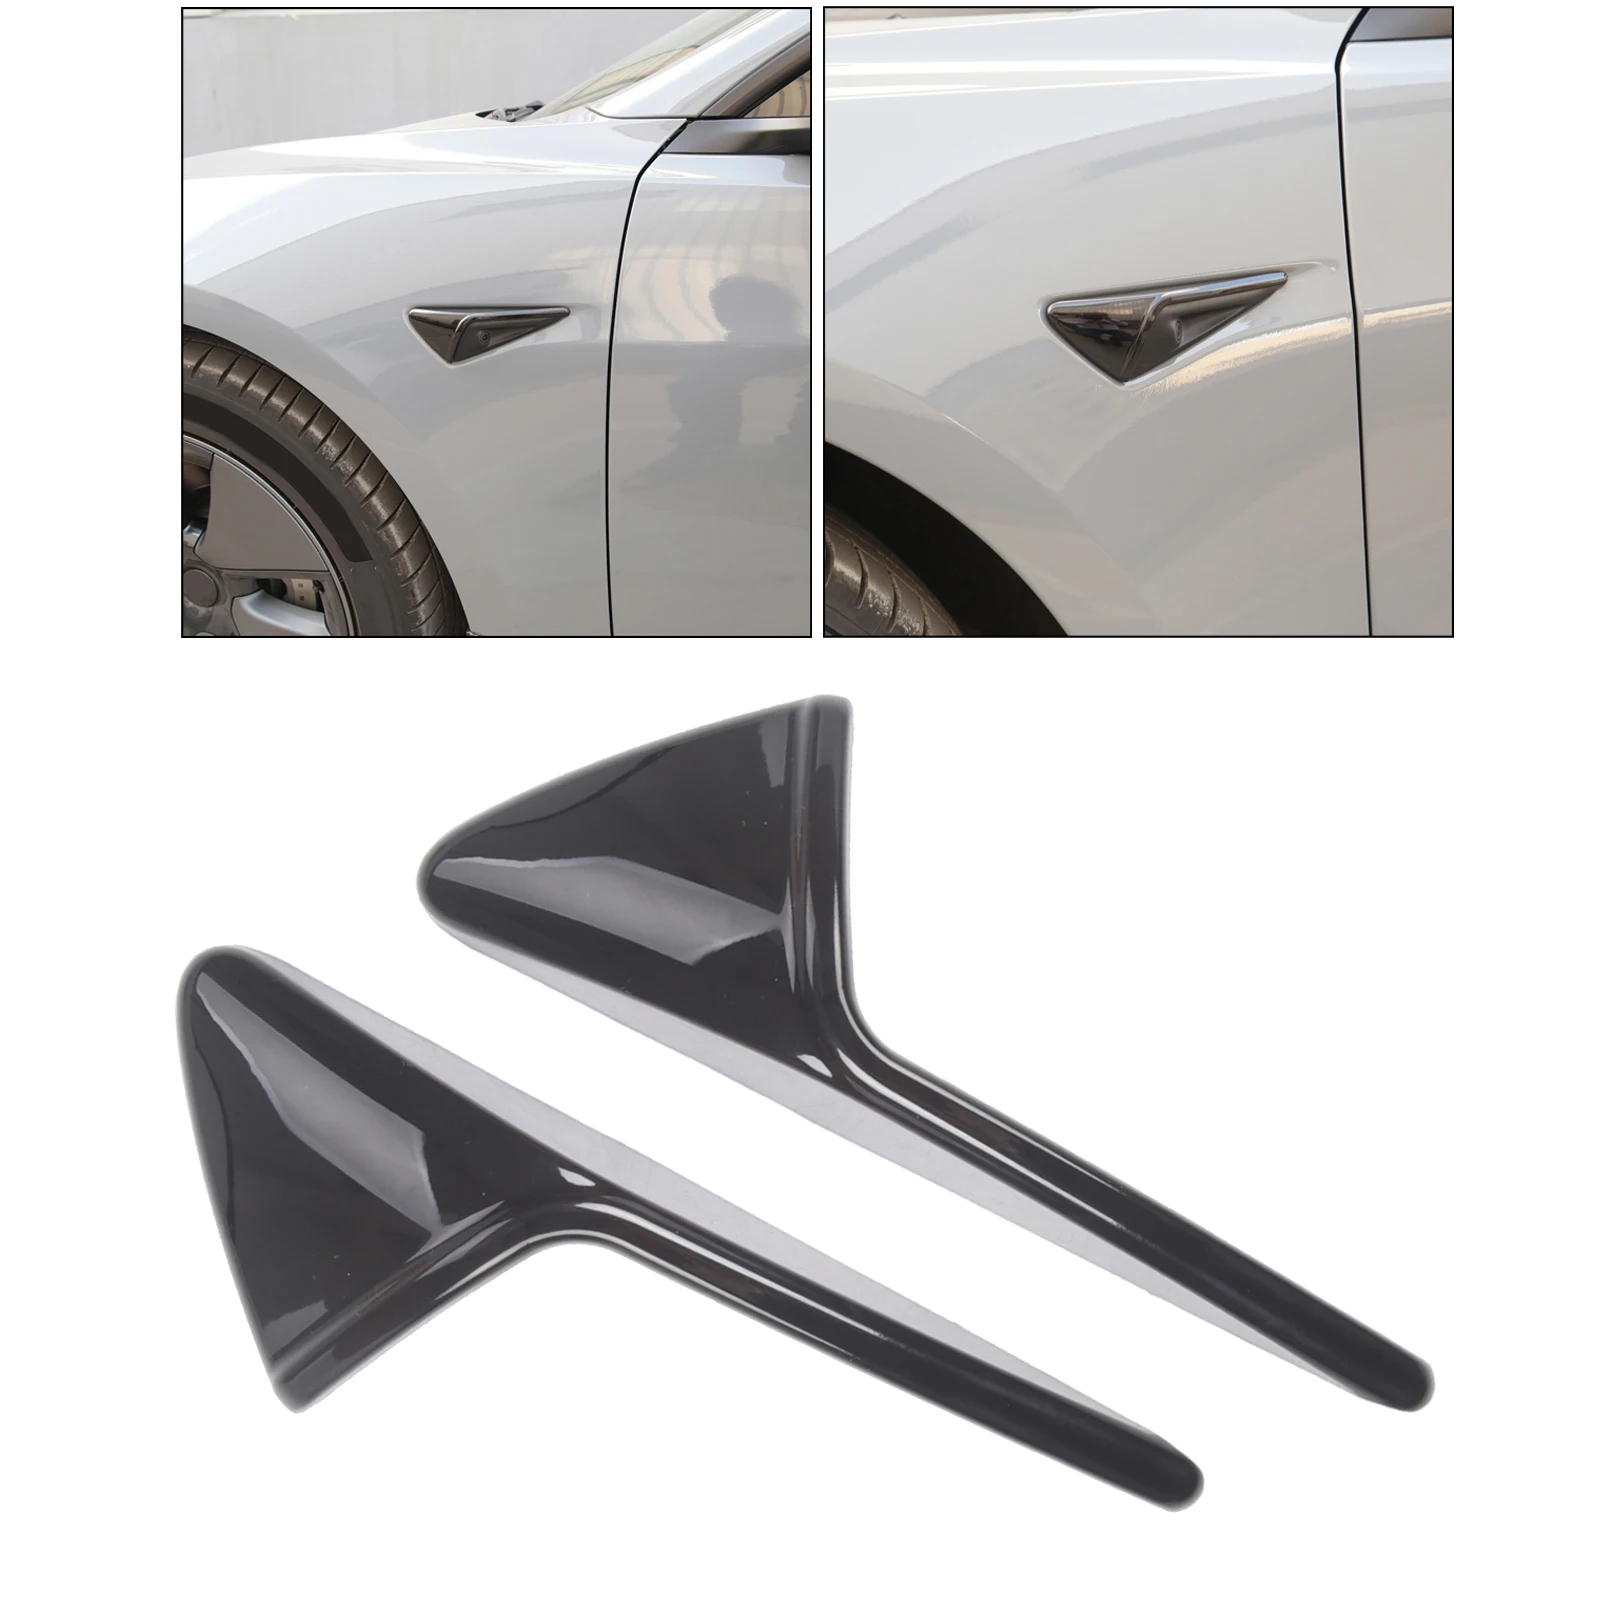 2pcs Side Camera Protection Cover Compatible for Tesla 2021 Decorative Trim ABS Auto Exterior Accessories Parts